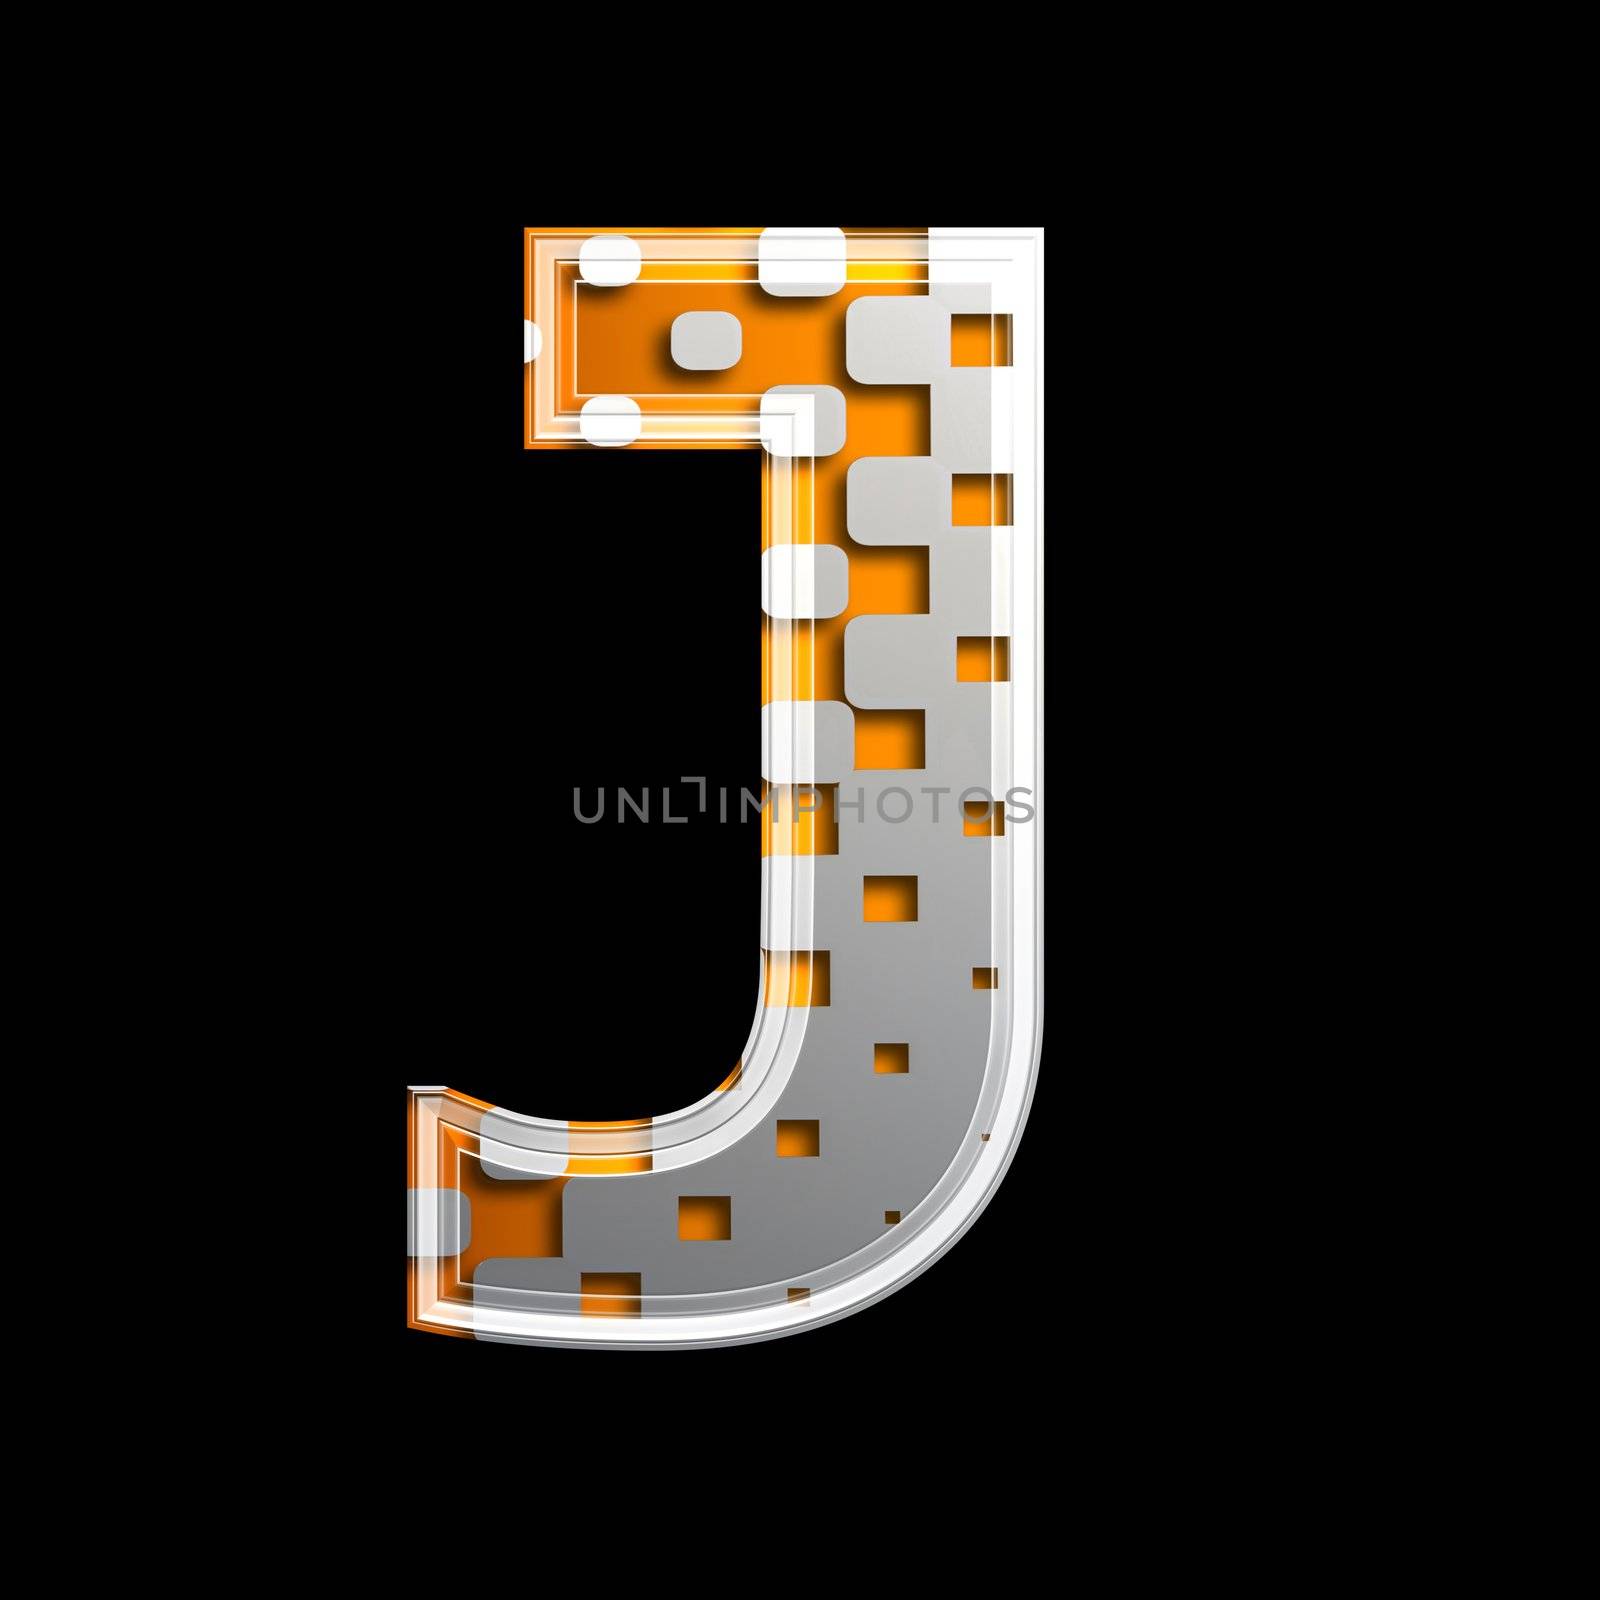 halftone 3d letter - J by chrisroll